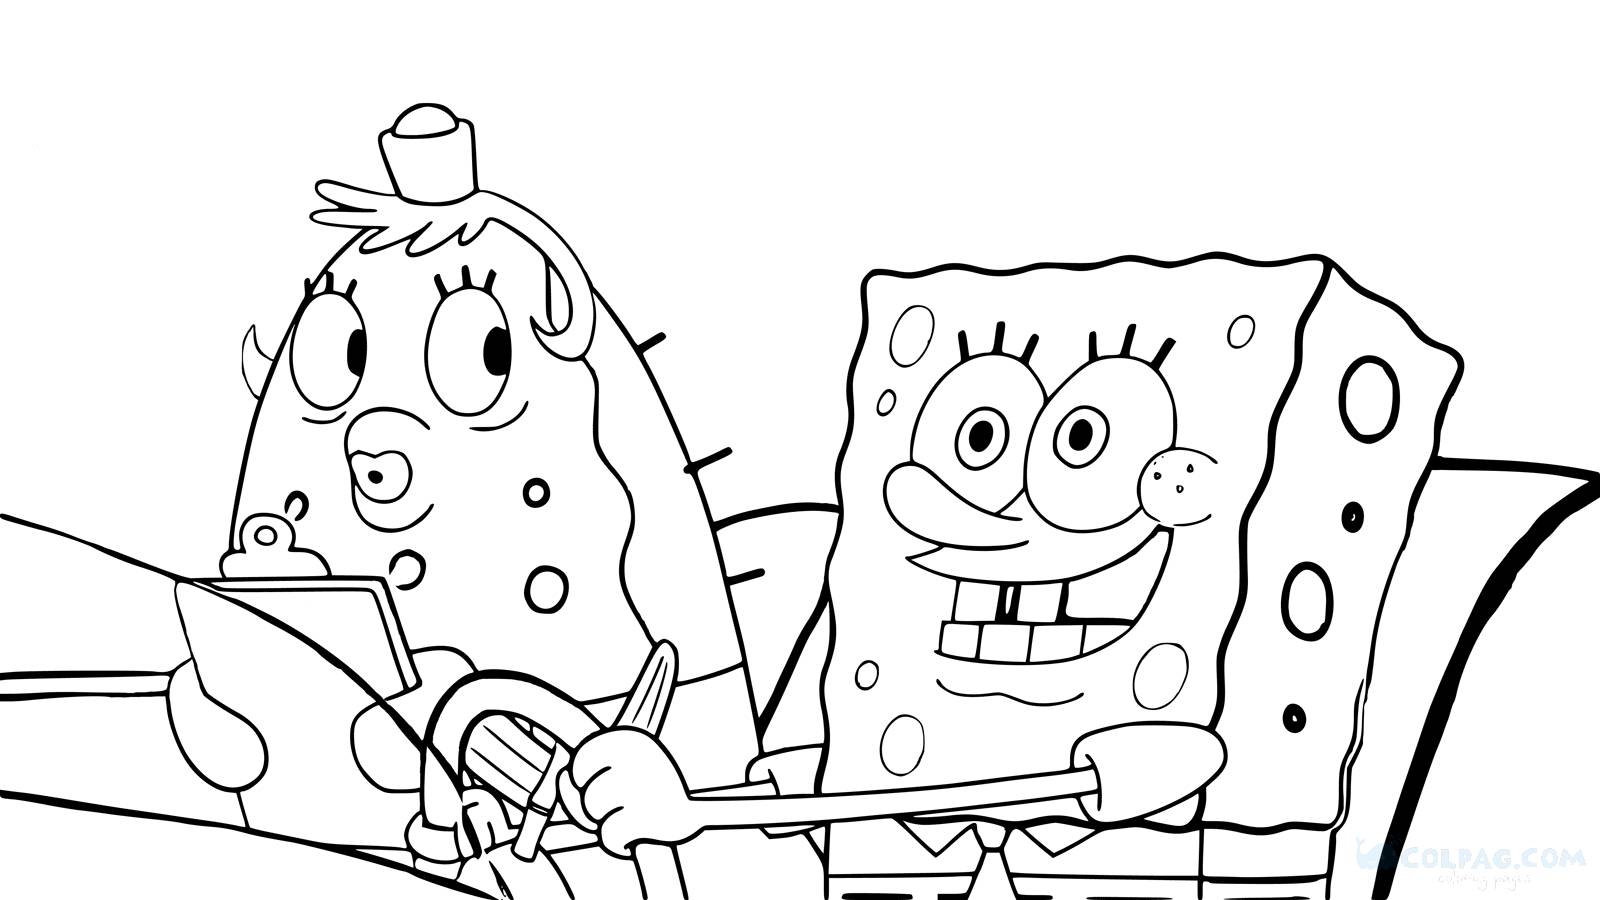 sponge-bob-coloring-page-colpag-com-6